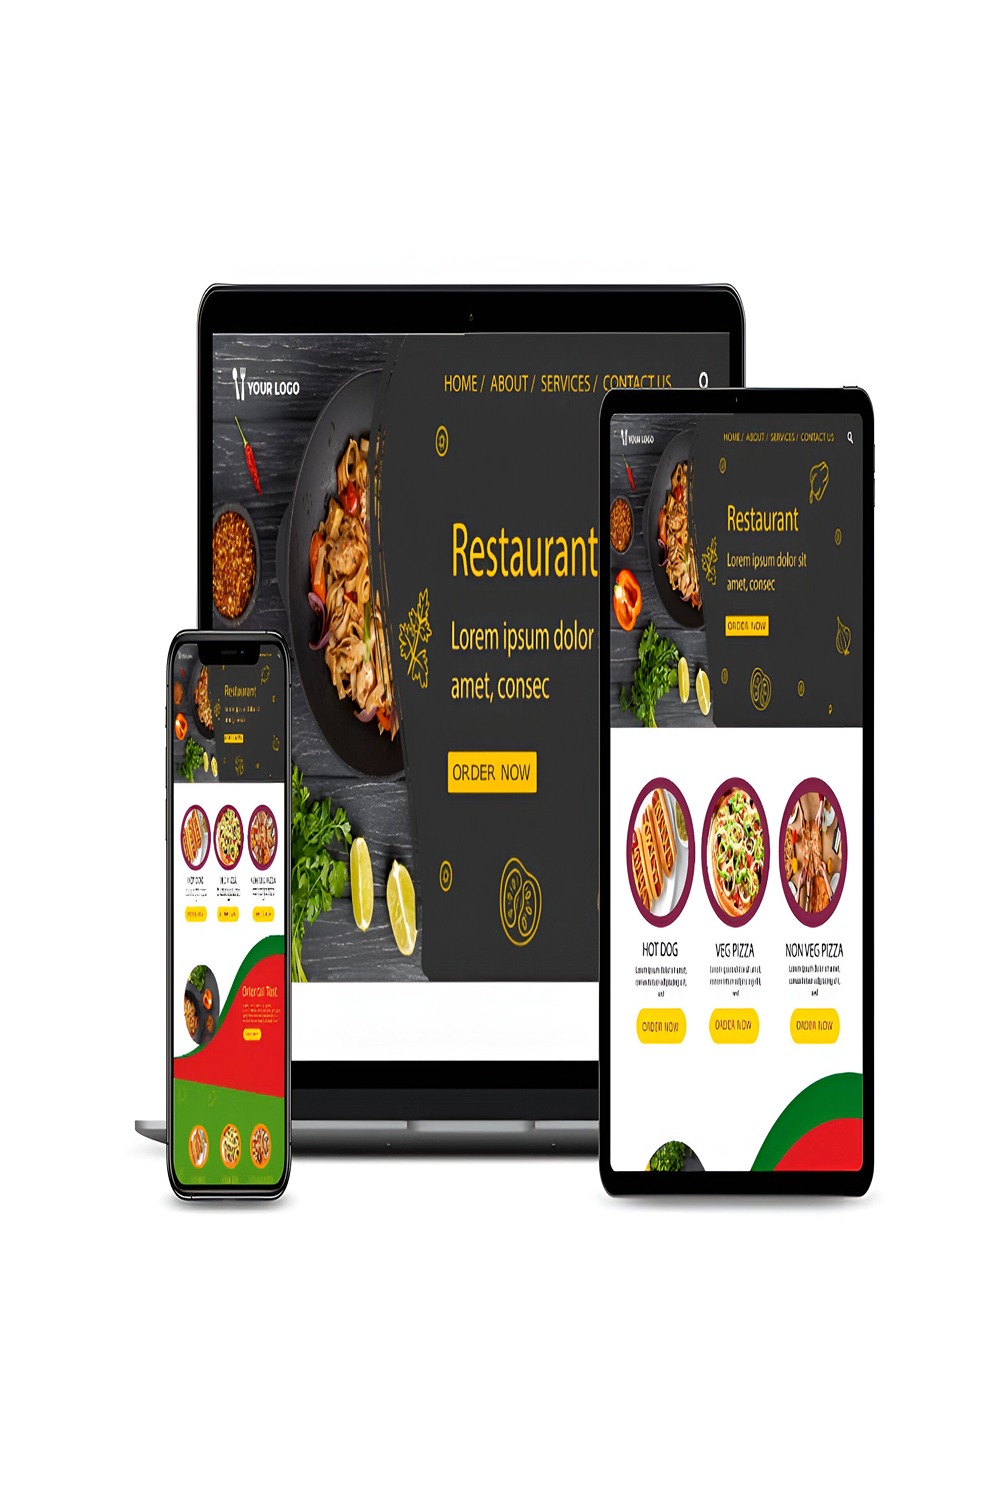 Restaurant - Website Design Template pinterest preview image.